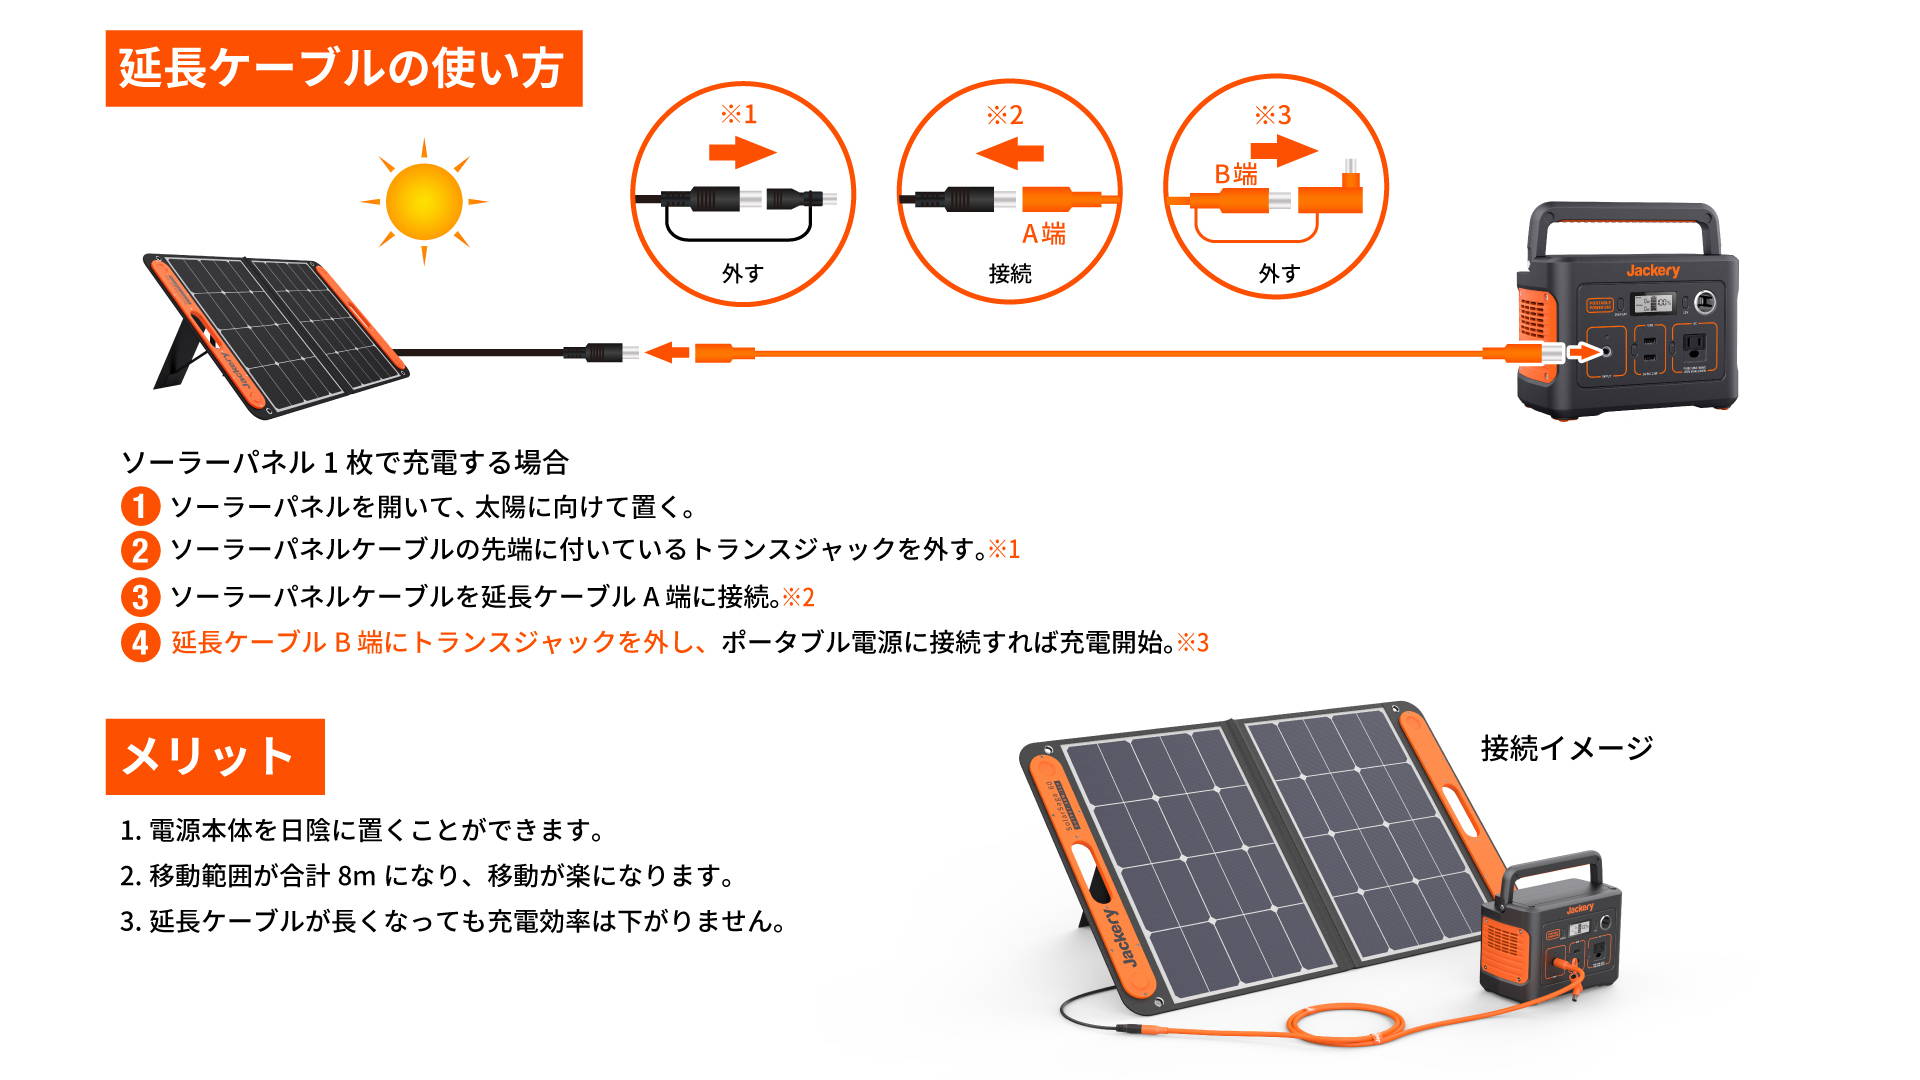 Jackery Solar Generator 240 ポータブル電源 ソーラーパネル セットで太陽光発電する方法